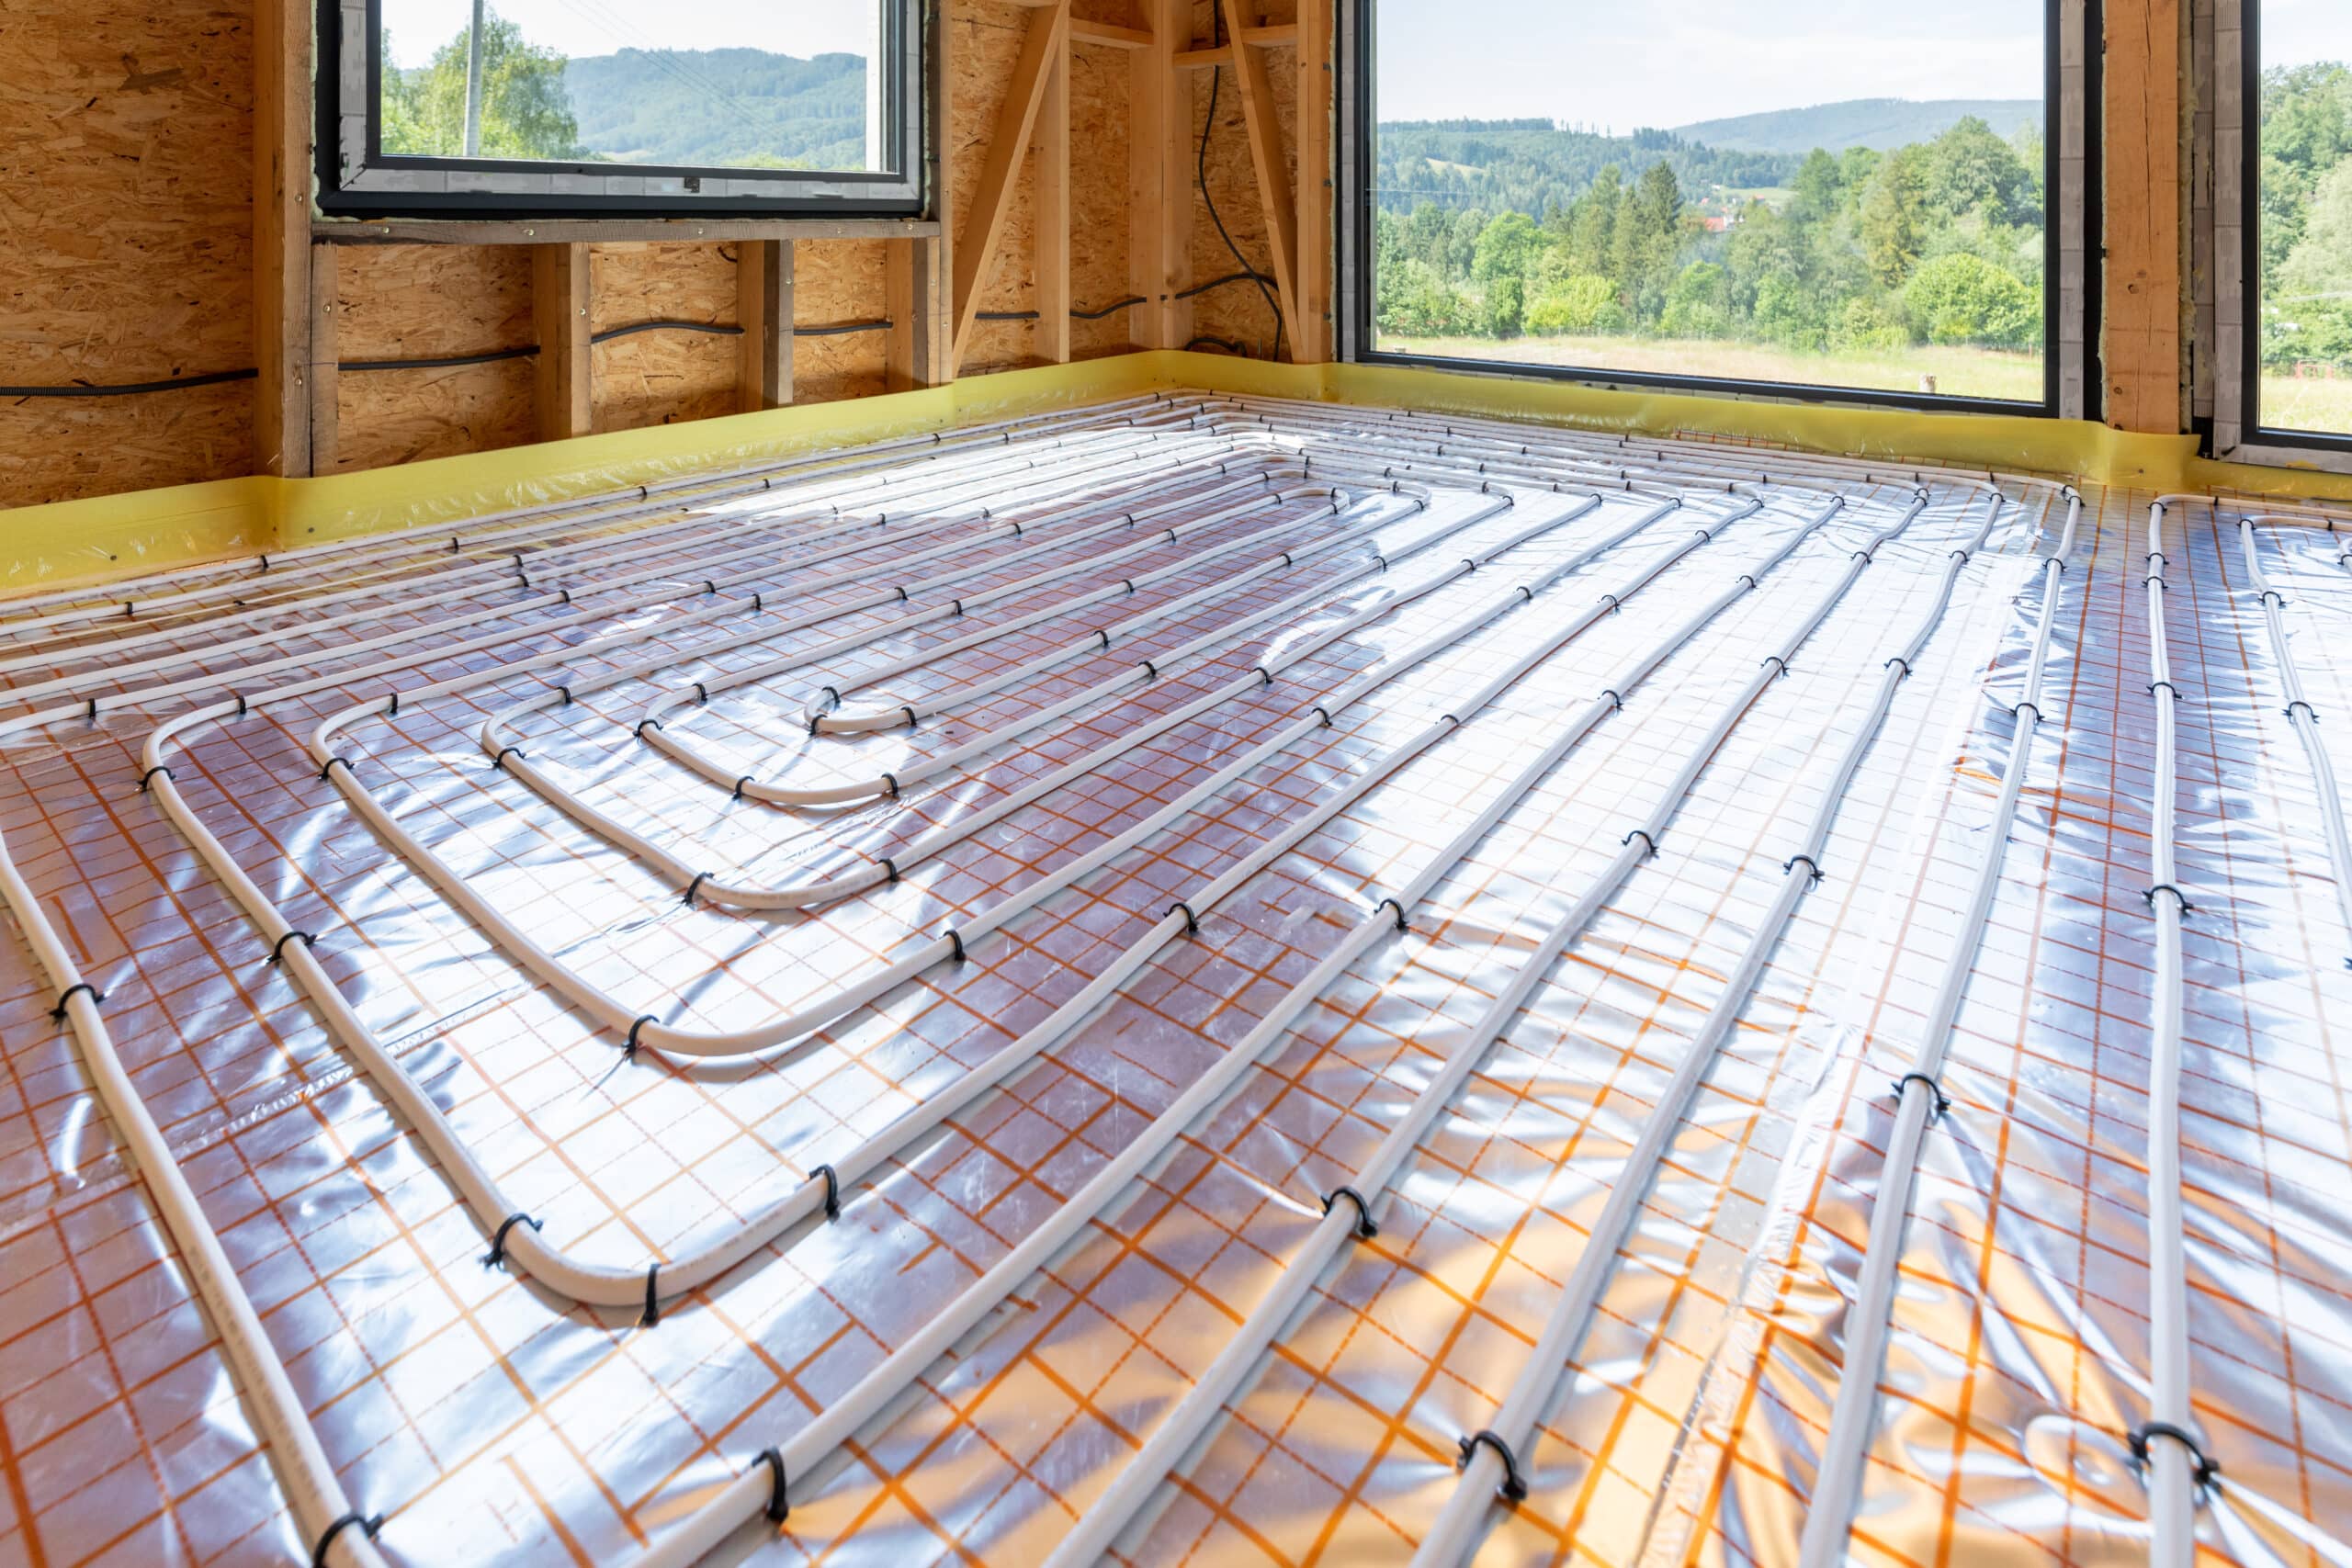 underfloor heating system installed in house under construction